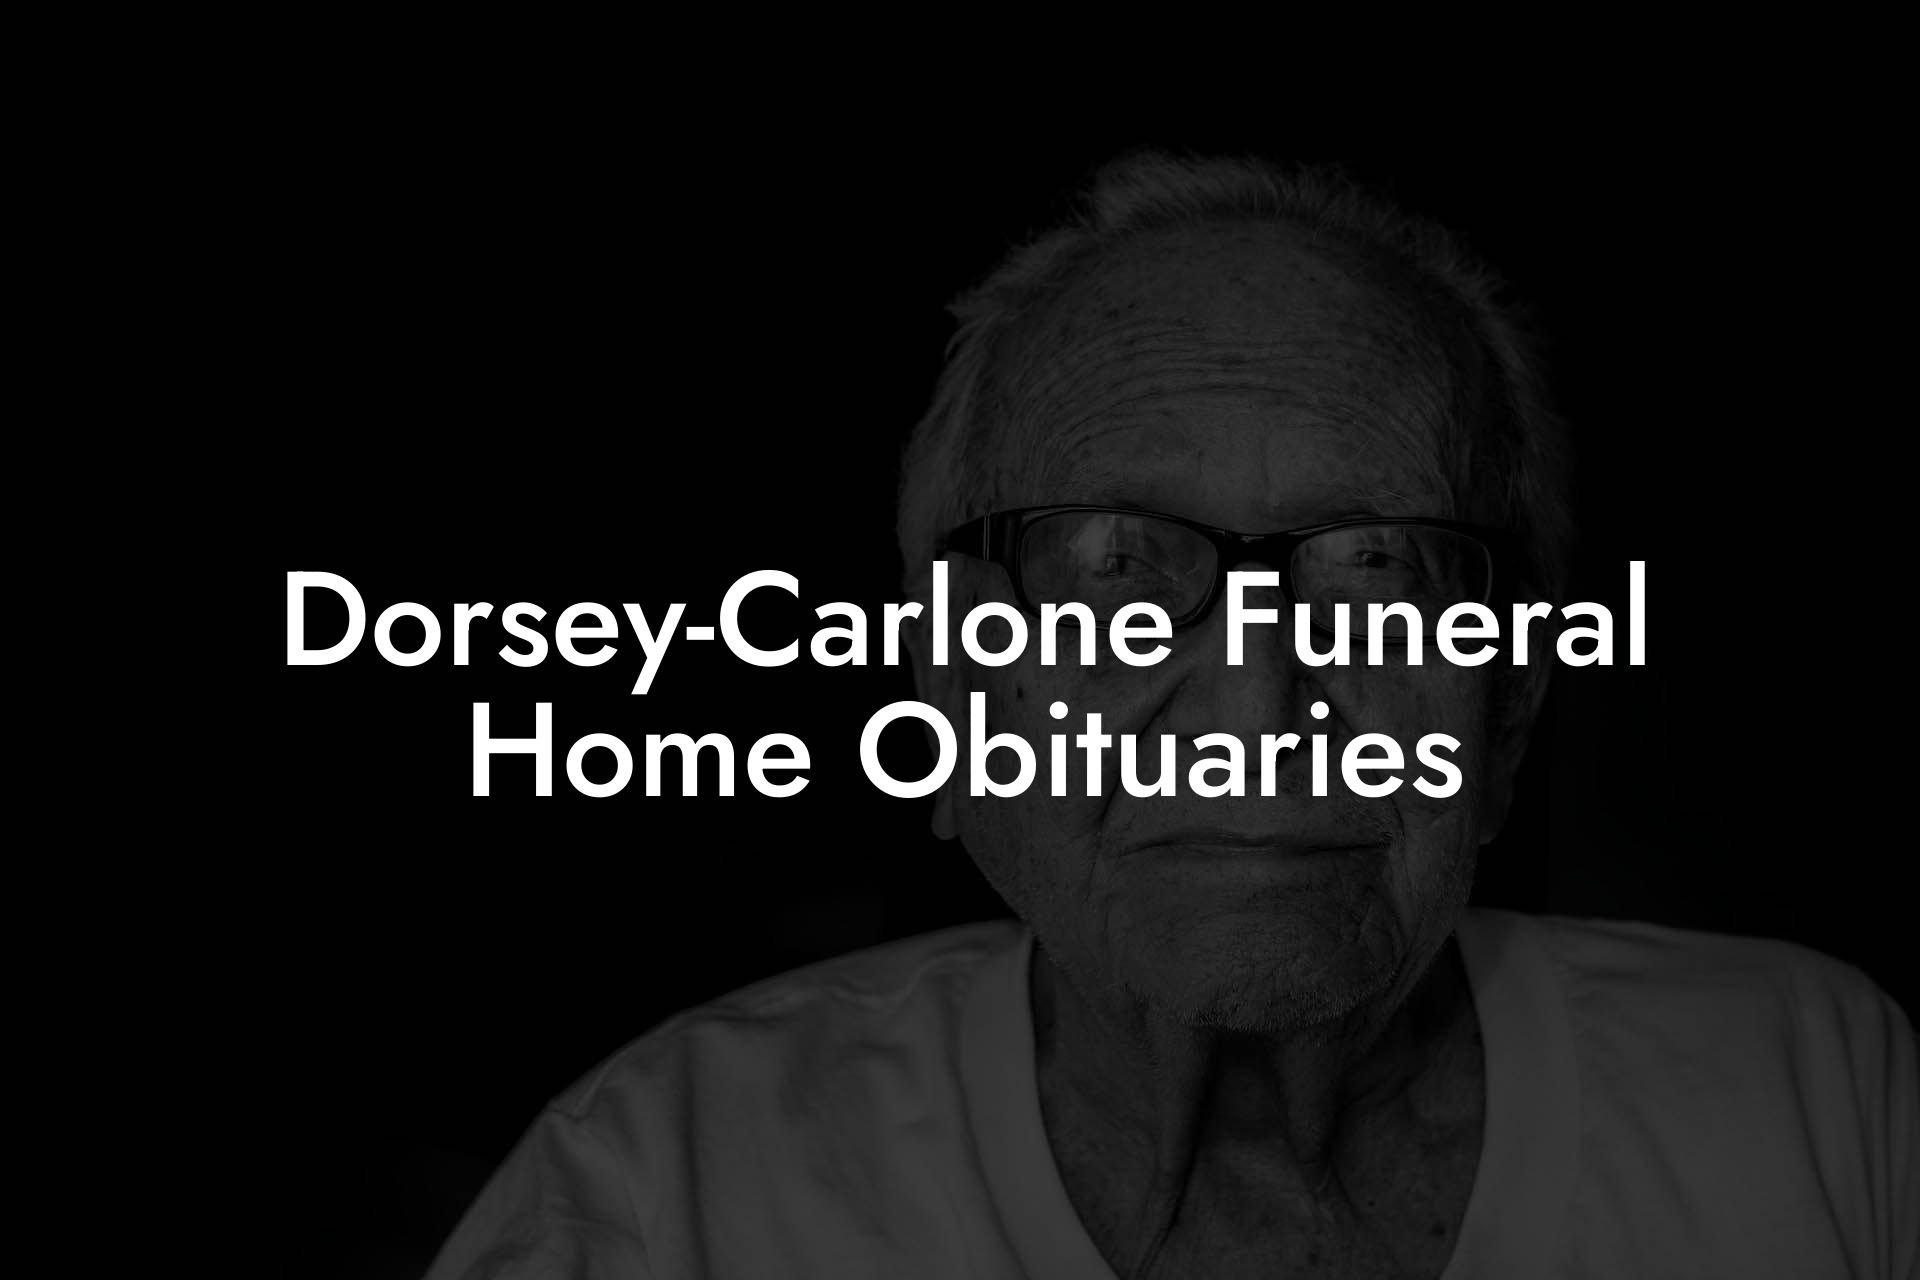 Dorsey-Carlone Funeral Home Obituaries